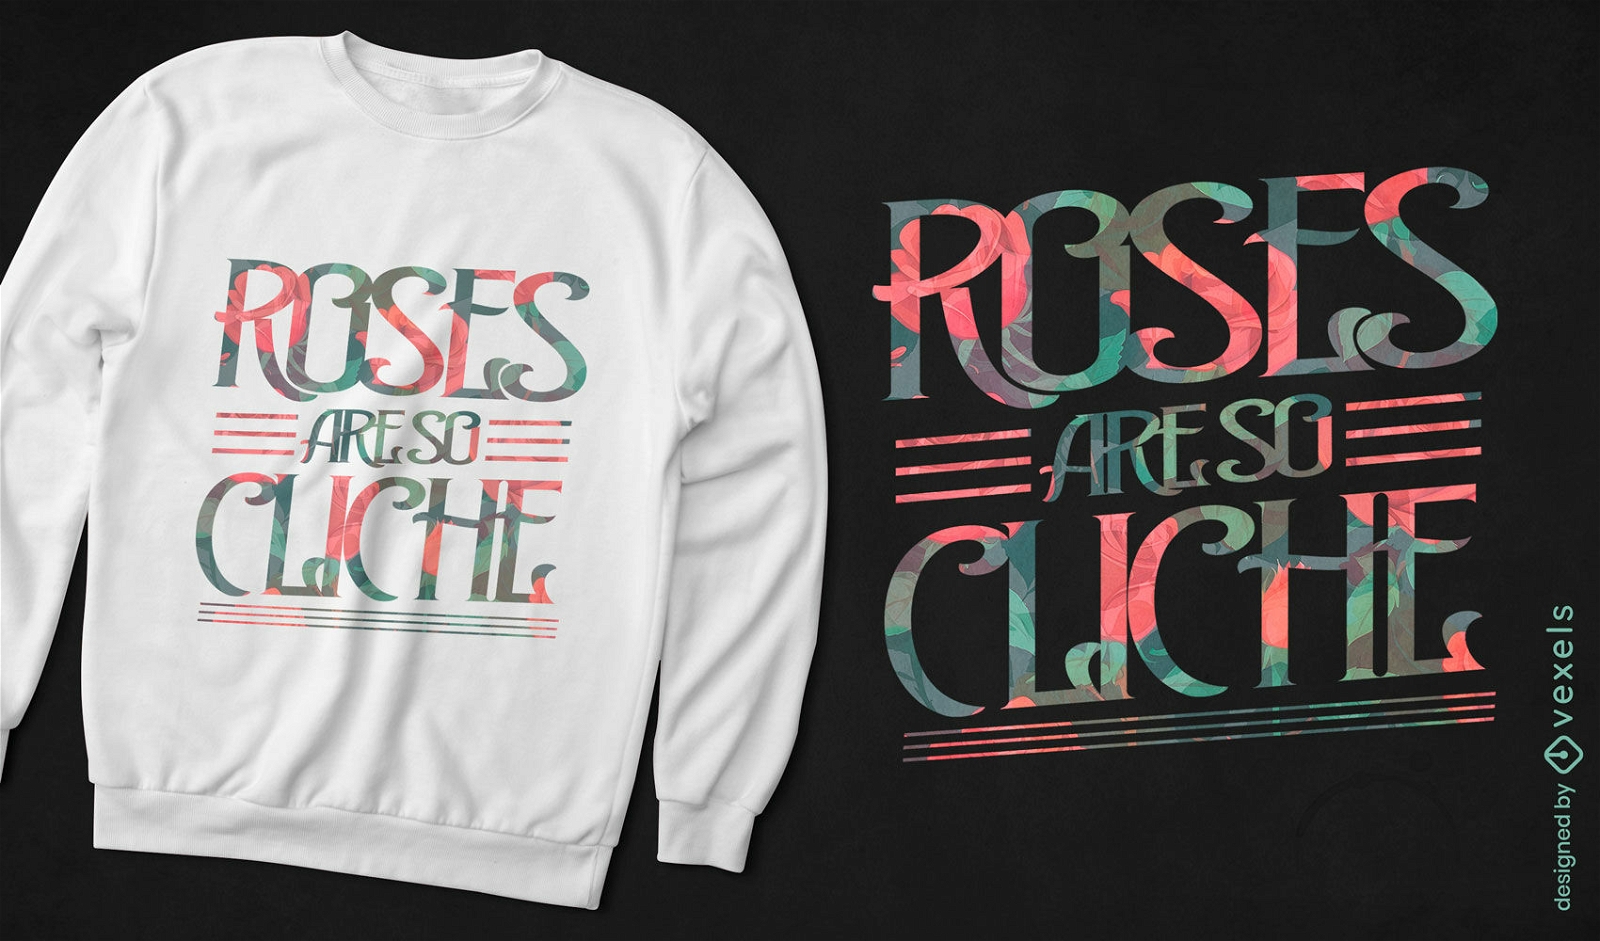 Roses cliché quote t-shirt design